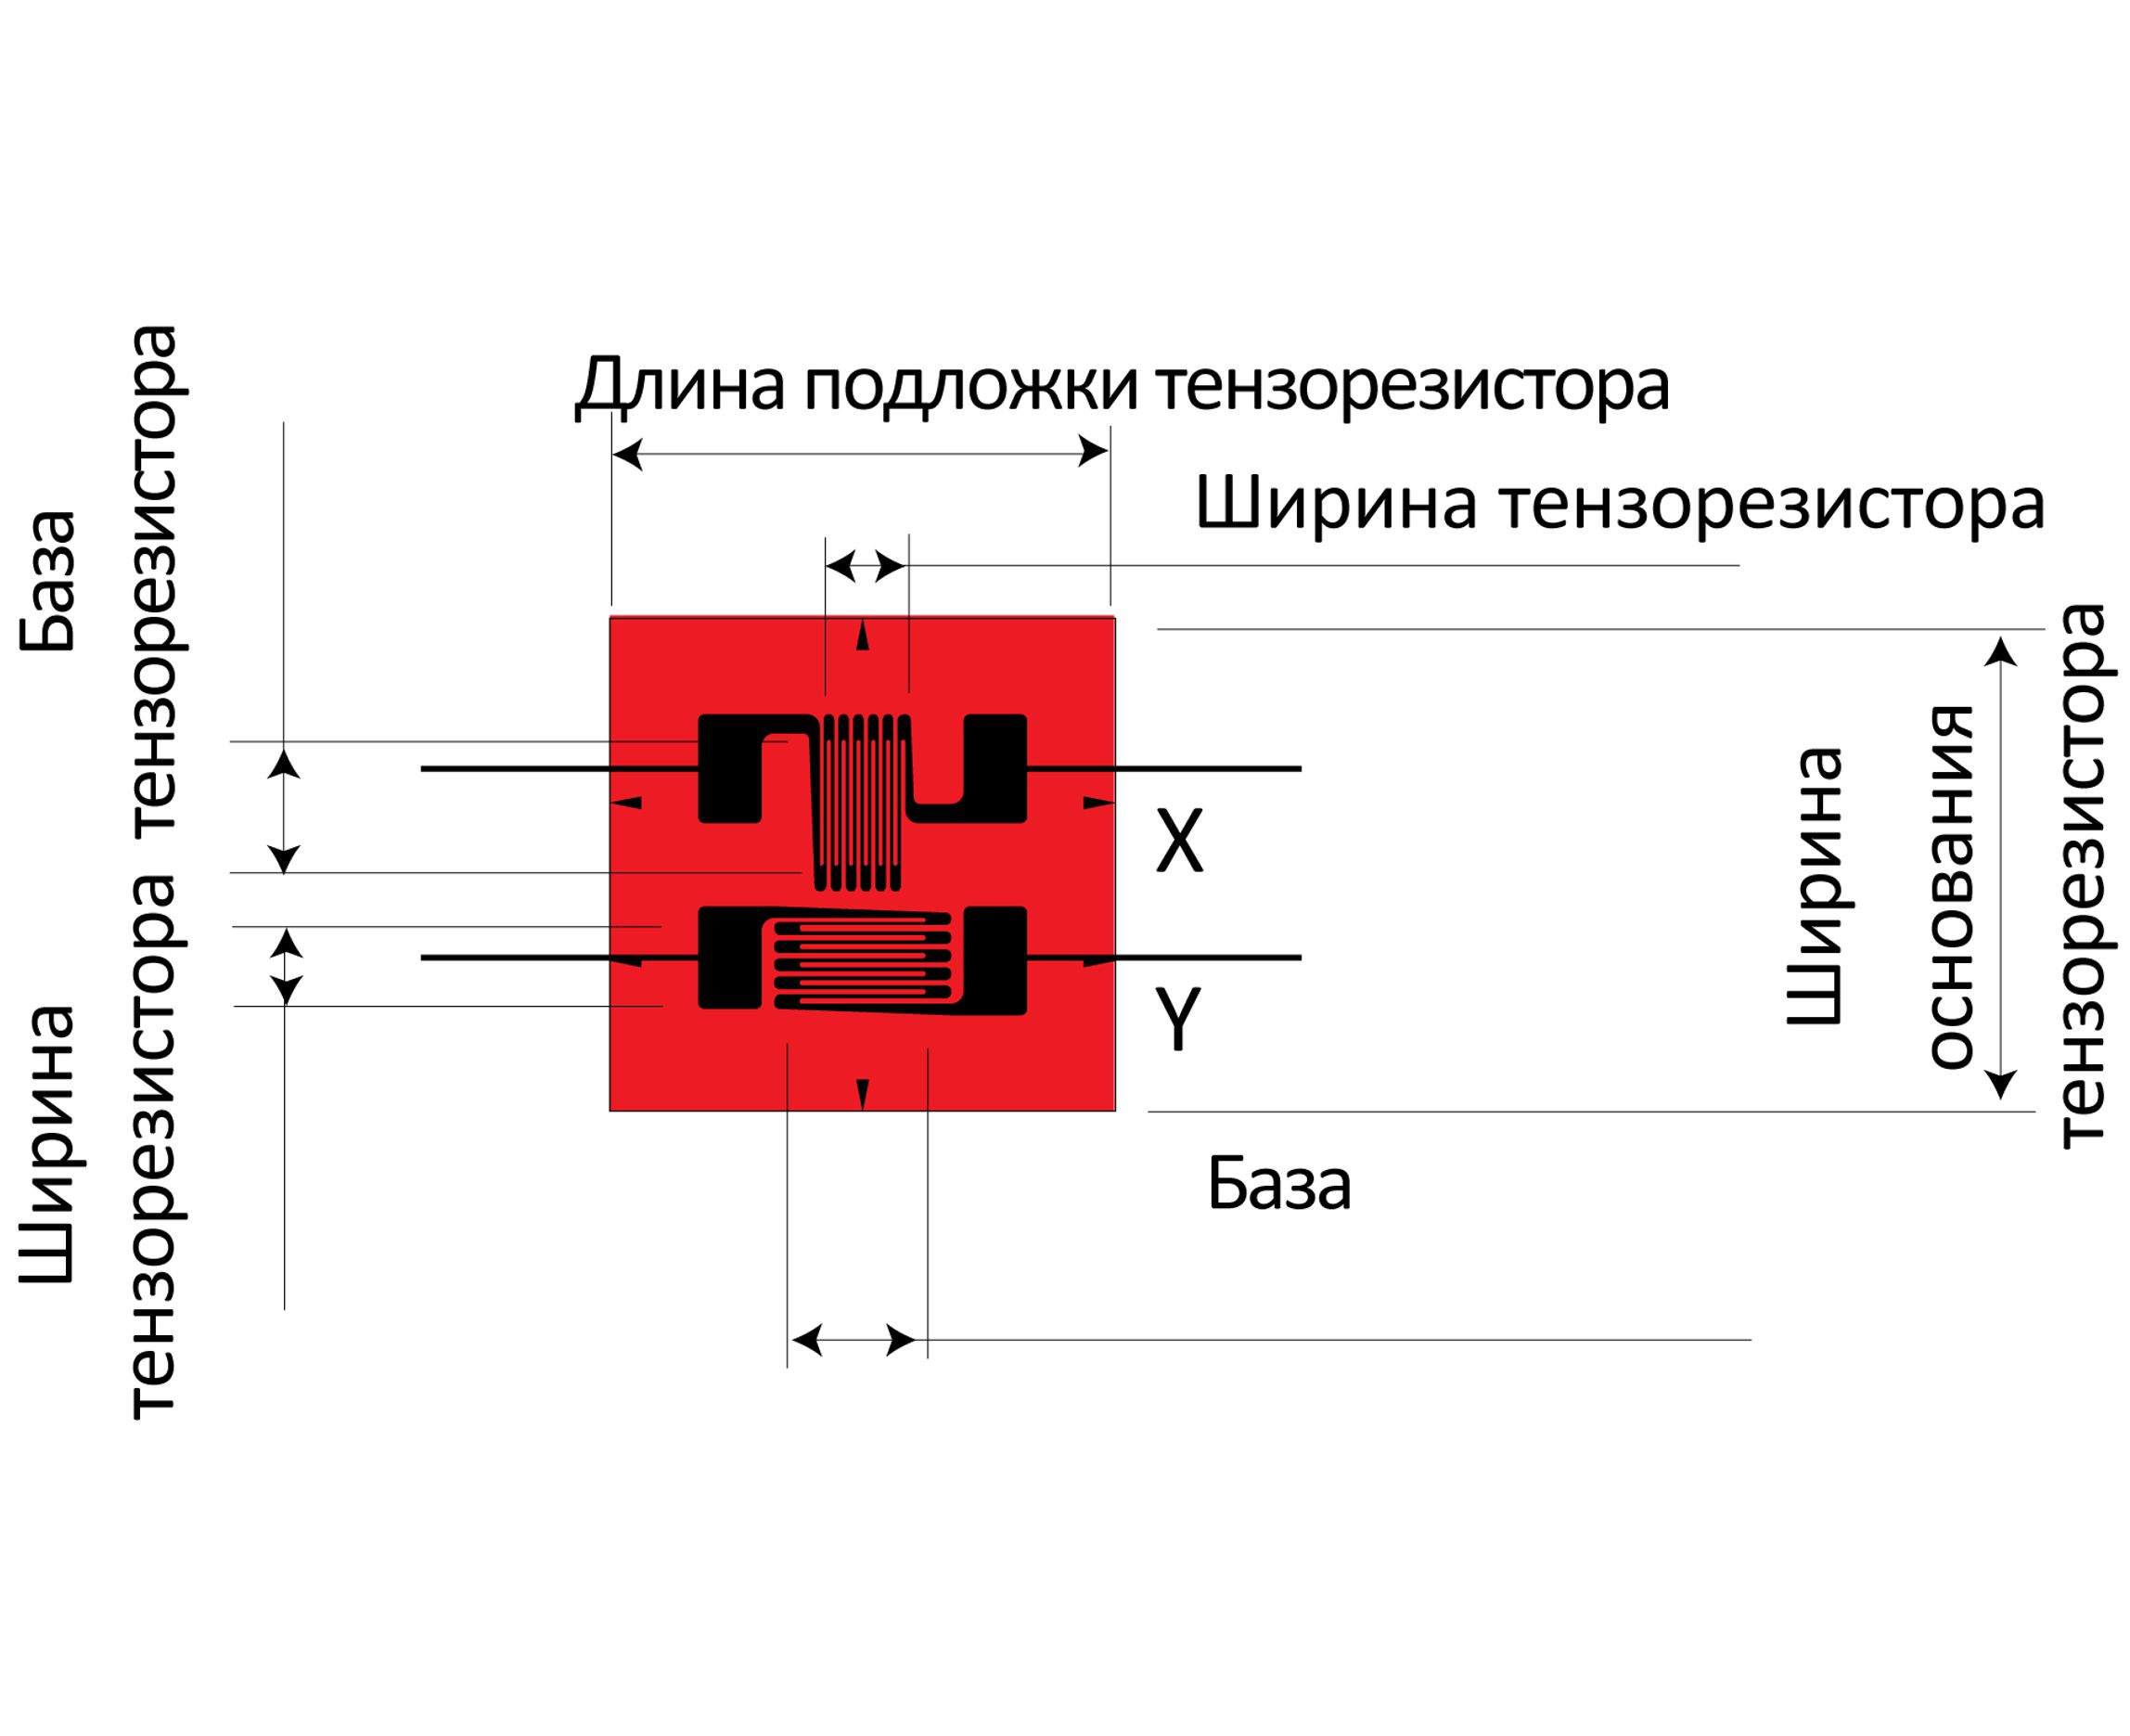 Тензорезисторы FCB/EUBC 2 элемента розетка